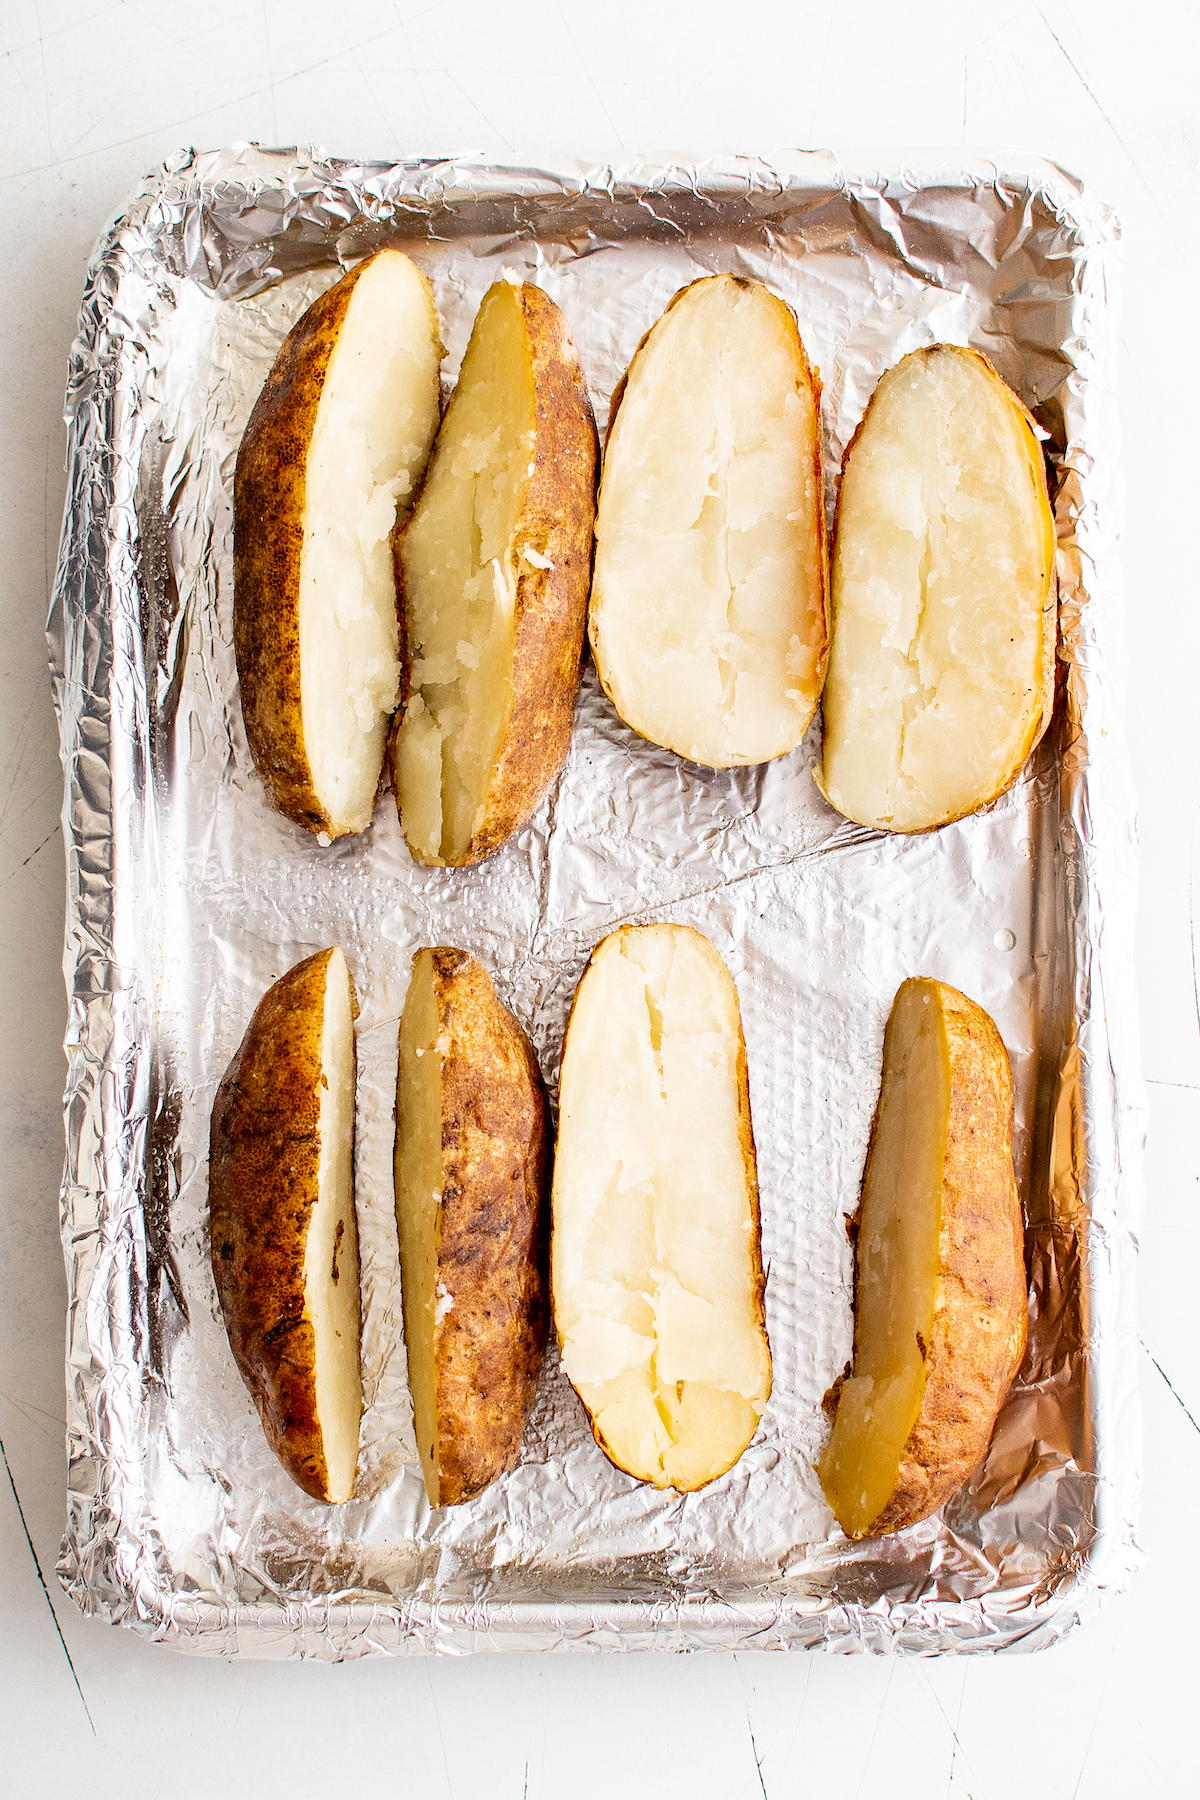 Baked potatoes sliced open on a baking sheet.